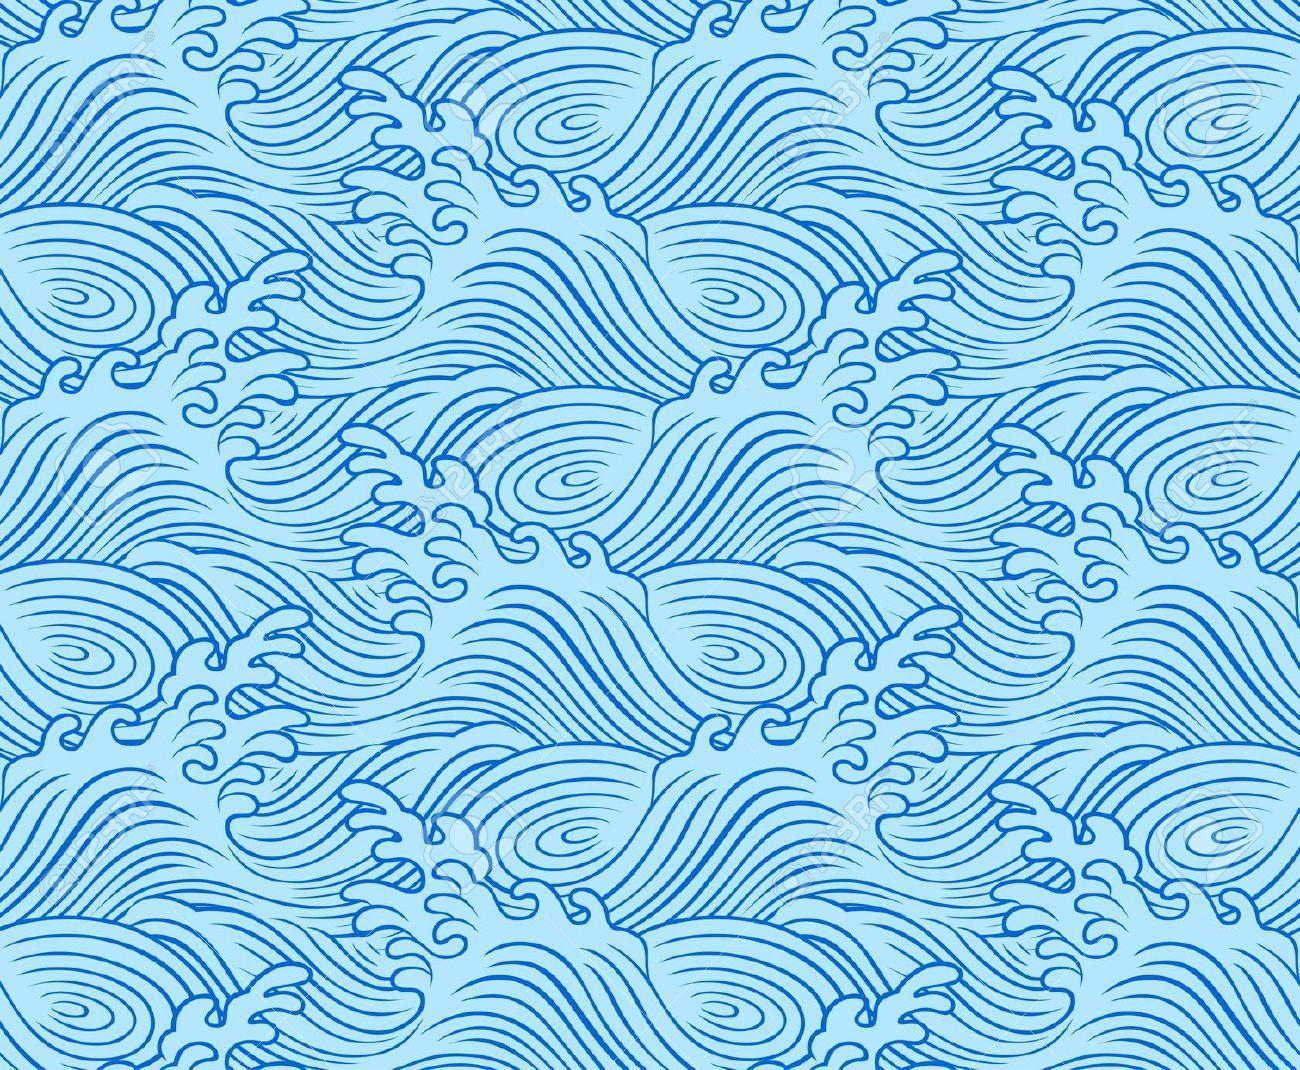 Japanese Wave Print Wallpapers - Top Free Japanese Wave Print ...